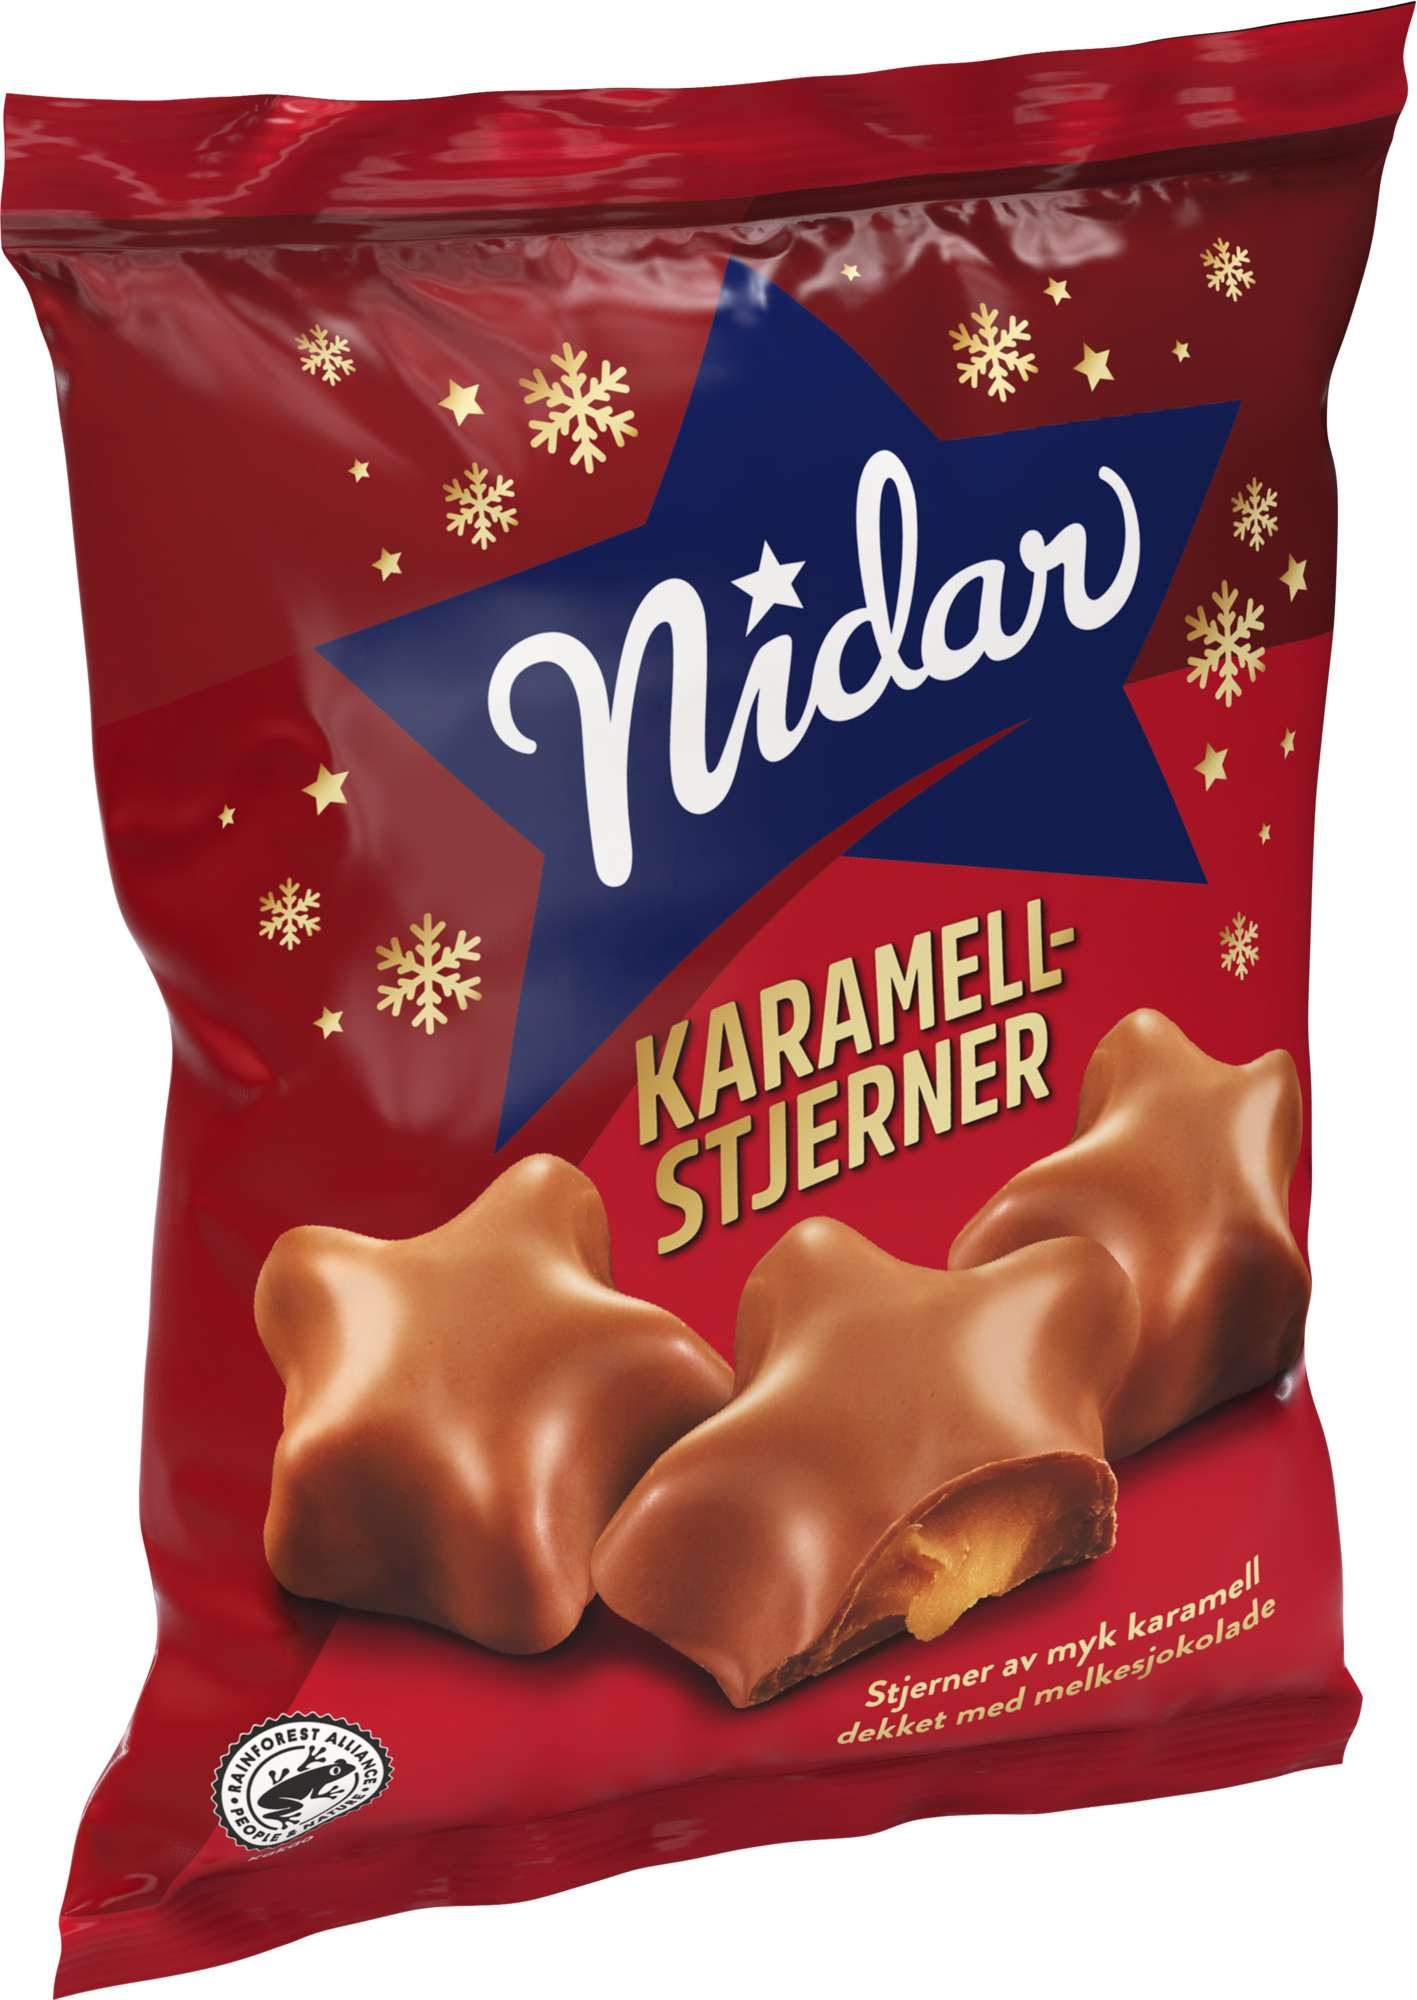 Nidar julesjokolade karamellstjerner  183g